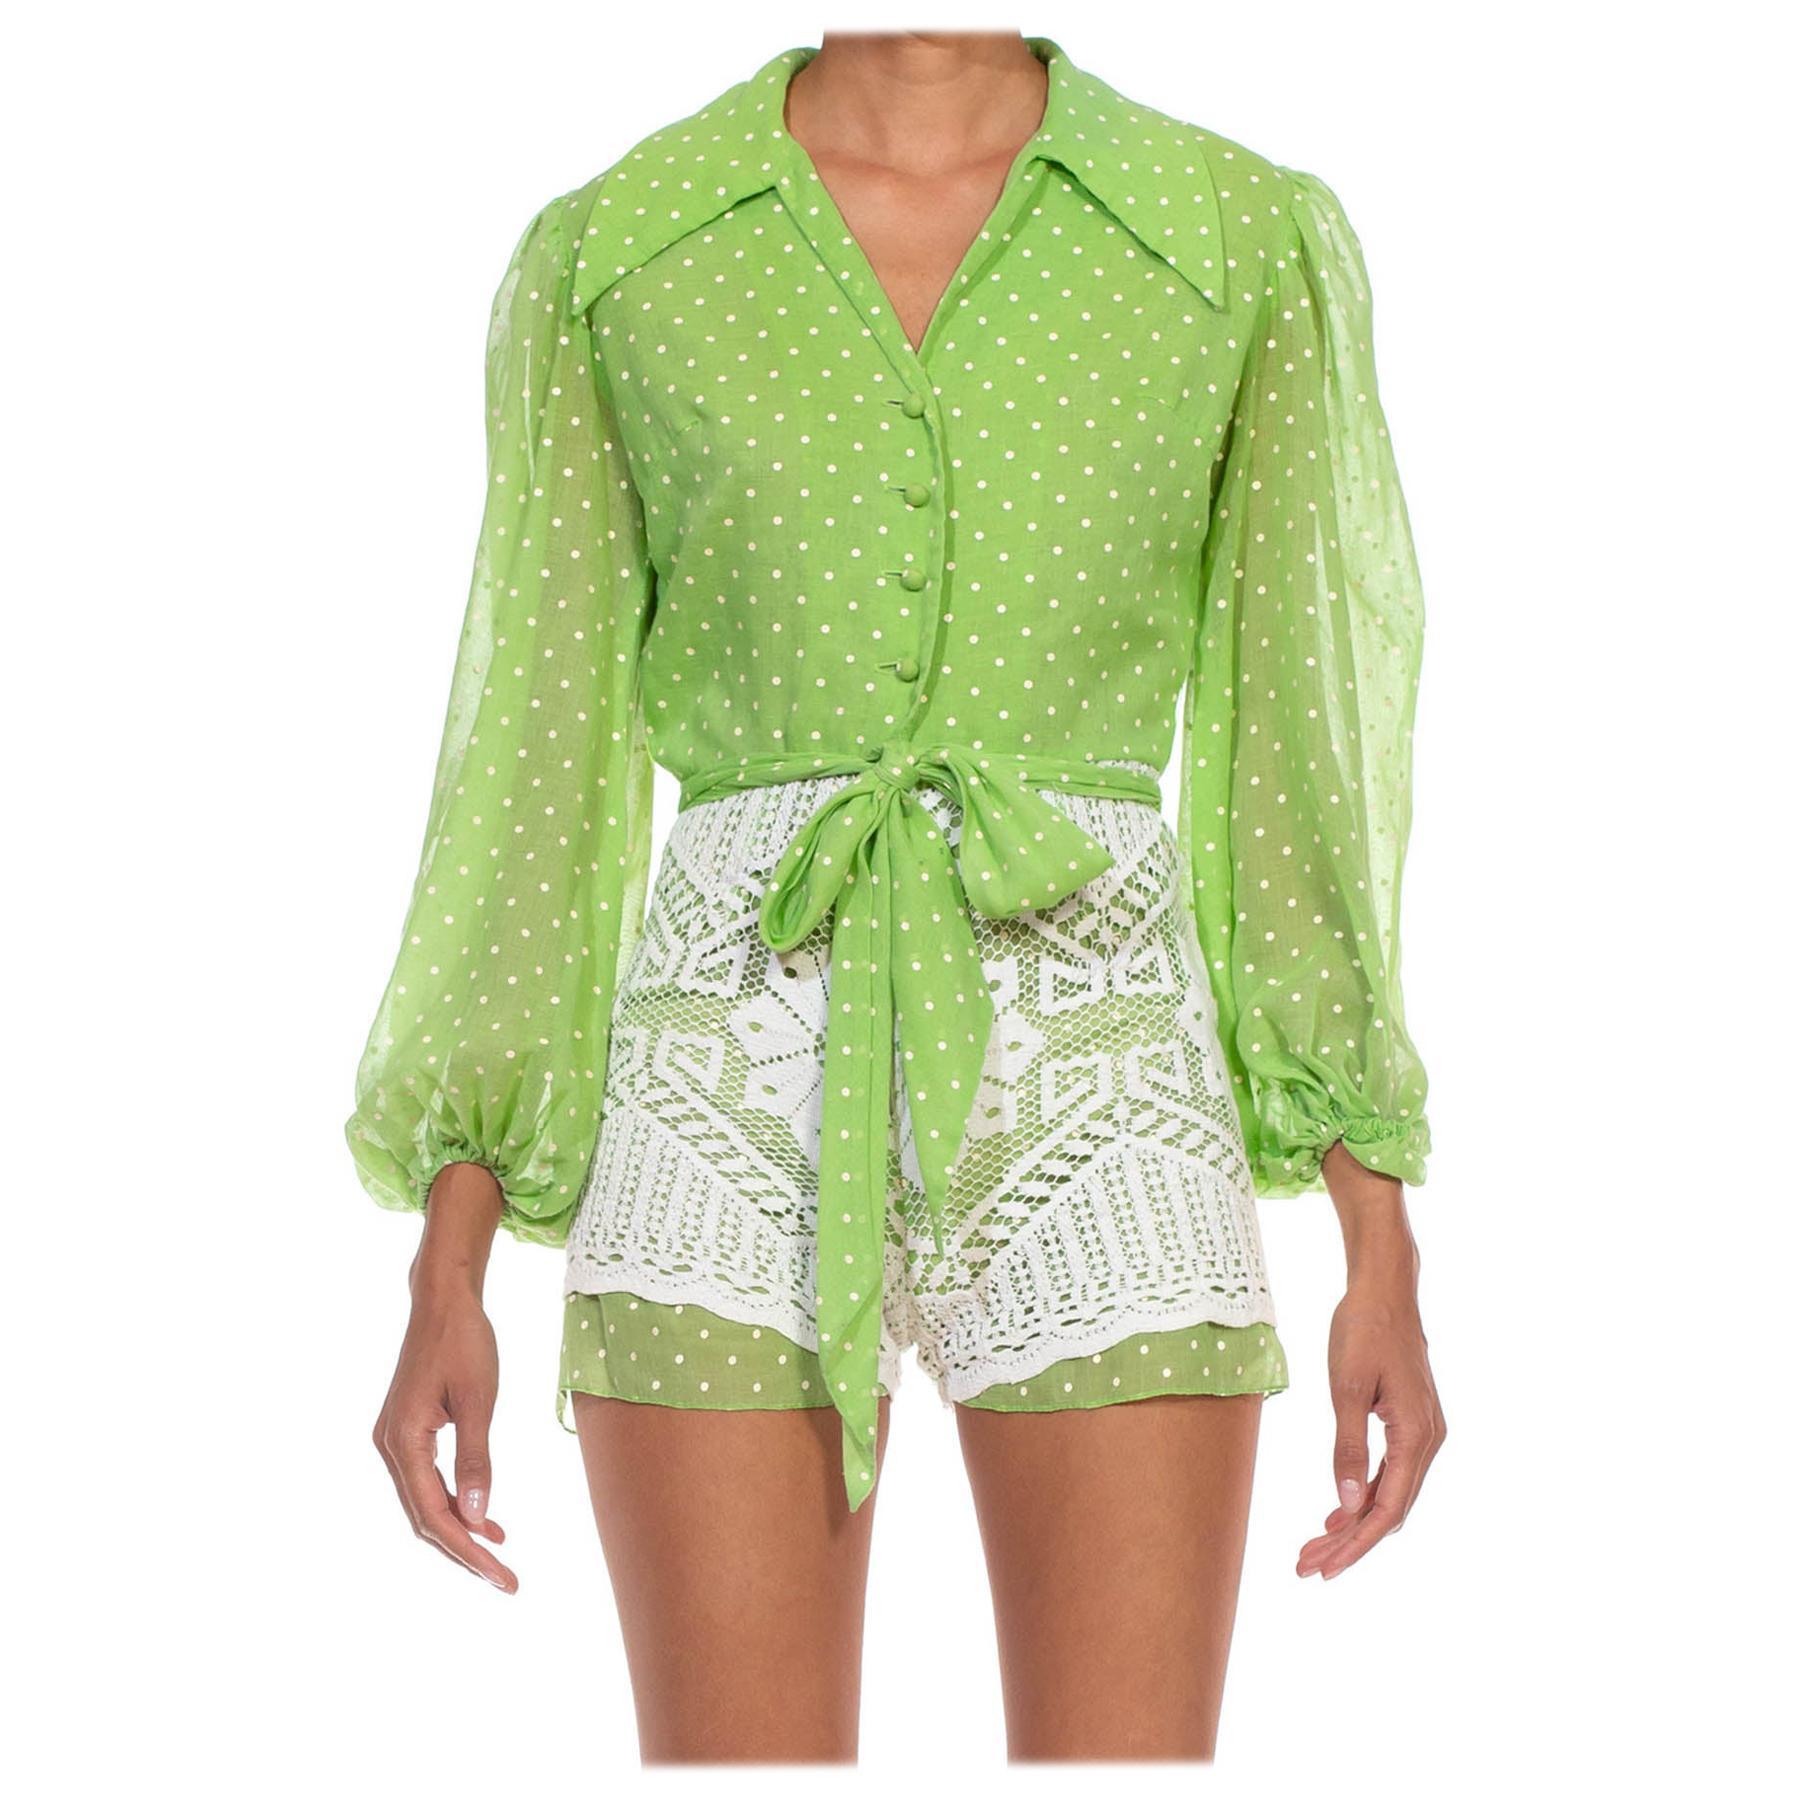 1960S Green & White Cotton Polka Dot Lace Skirt Romper For Sale